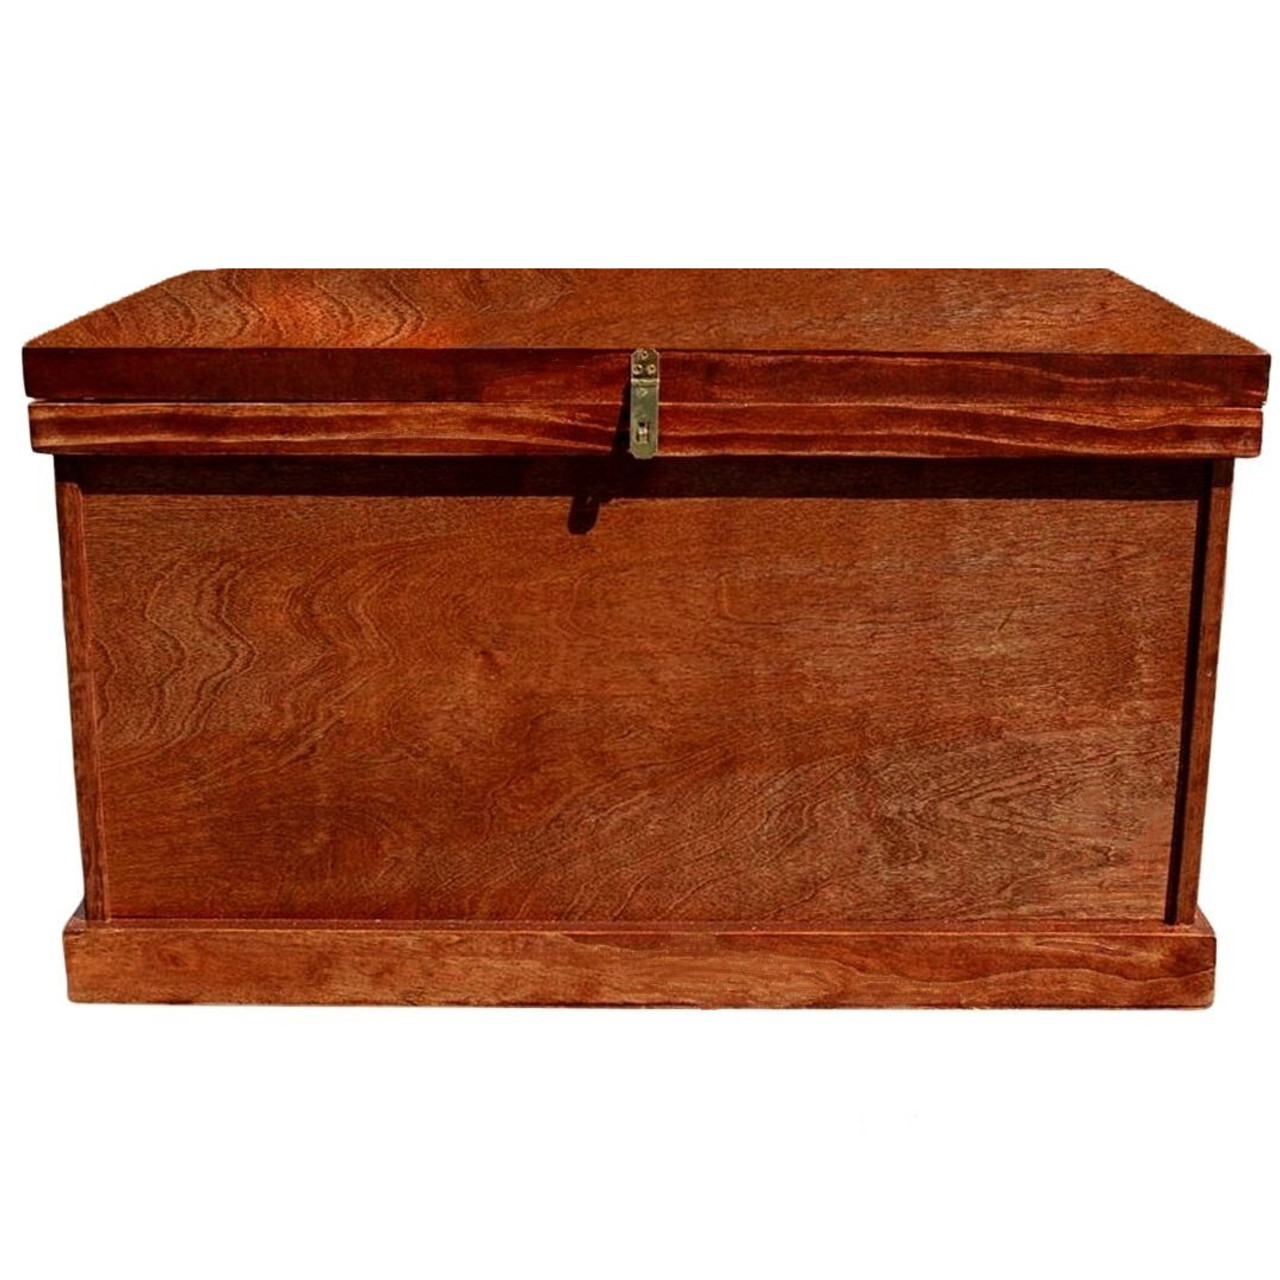  Large Antique Style Steamer Trunk, Decorative Storage Box :  Home & Kitchen